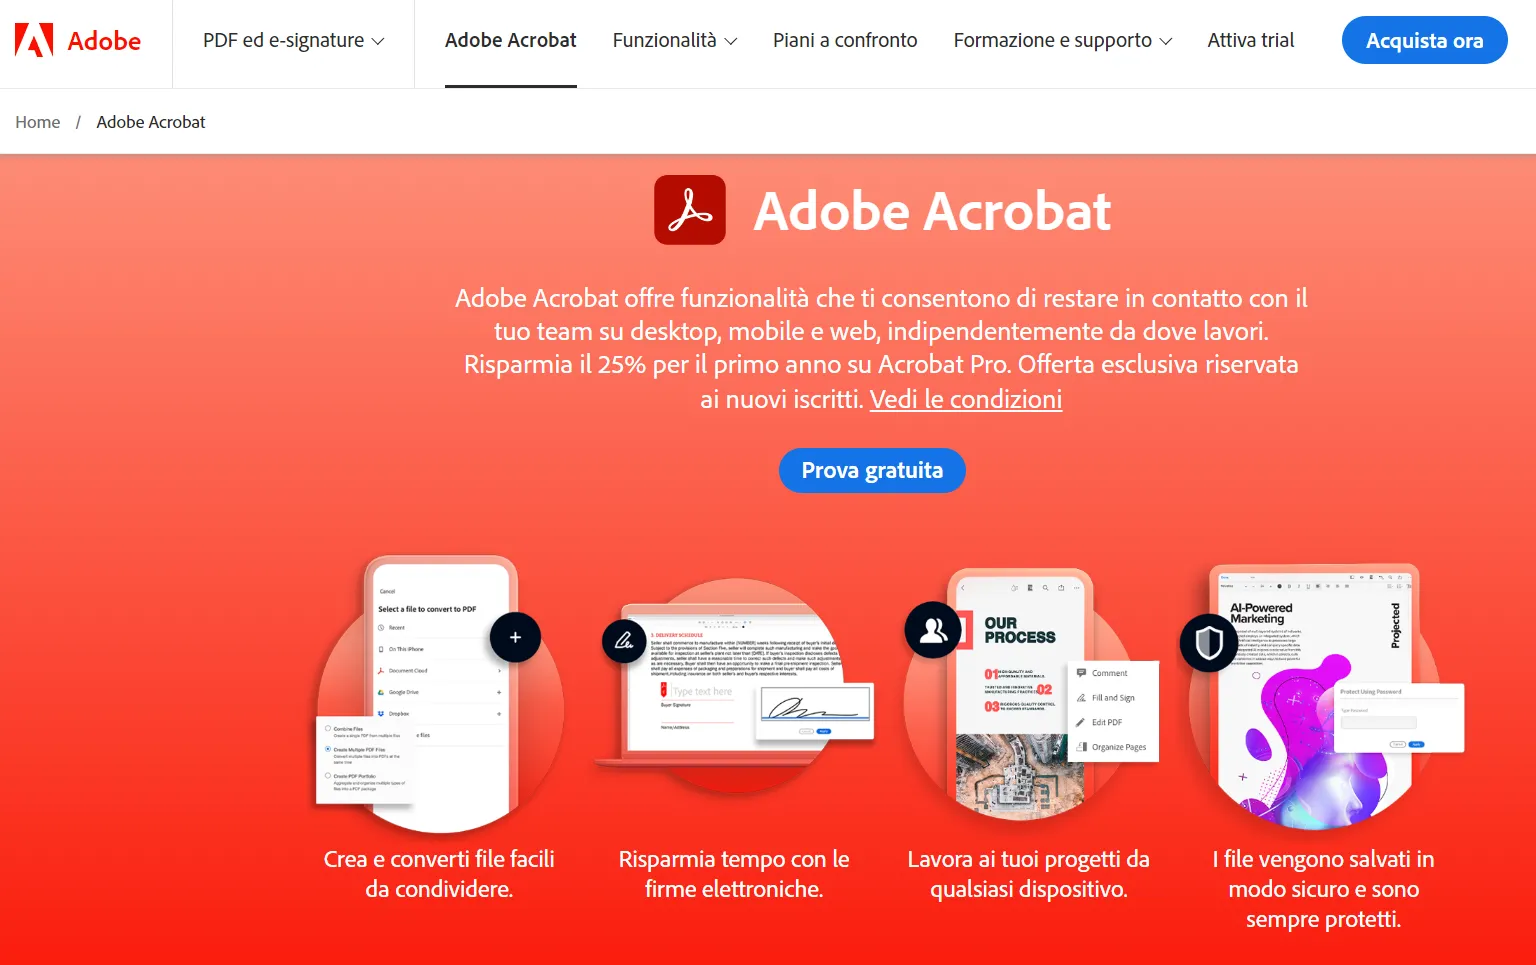 PDF editor Adobe